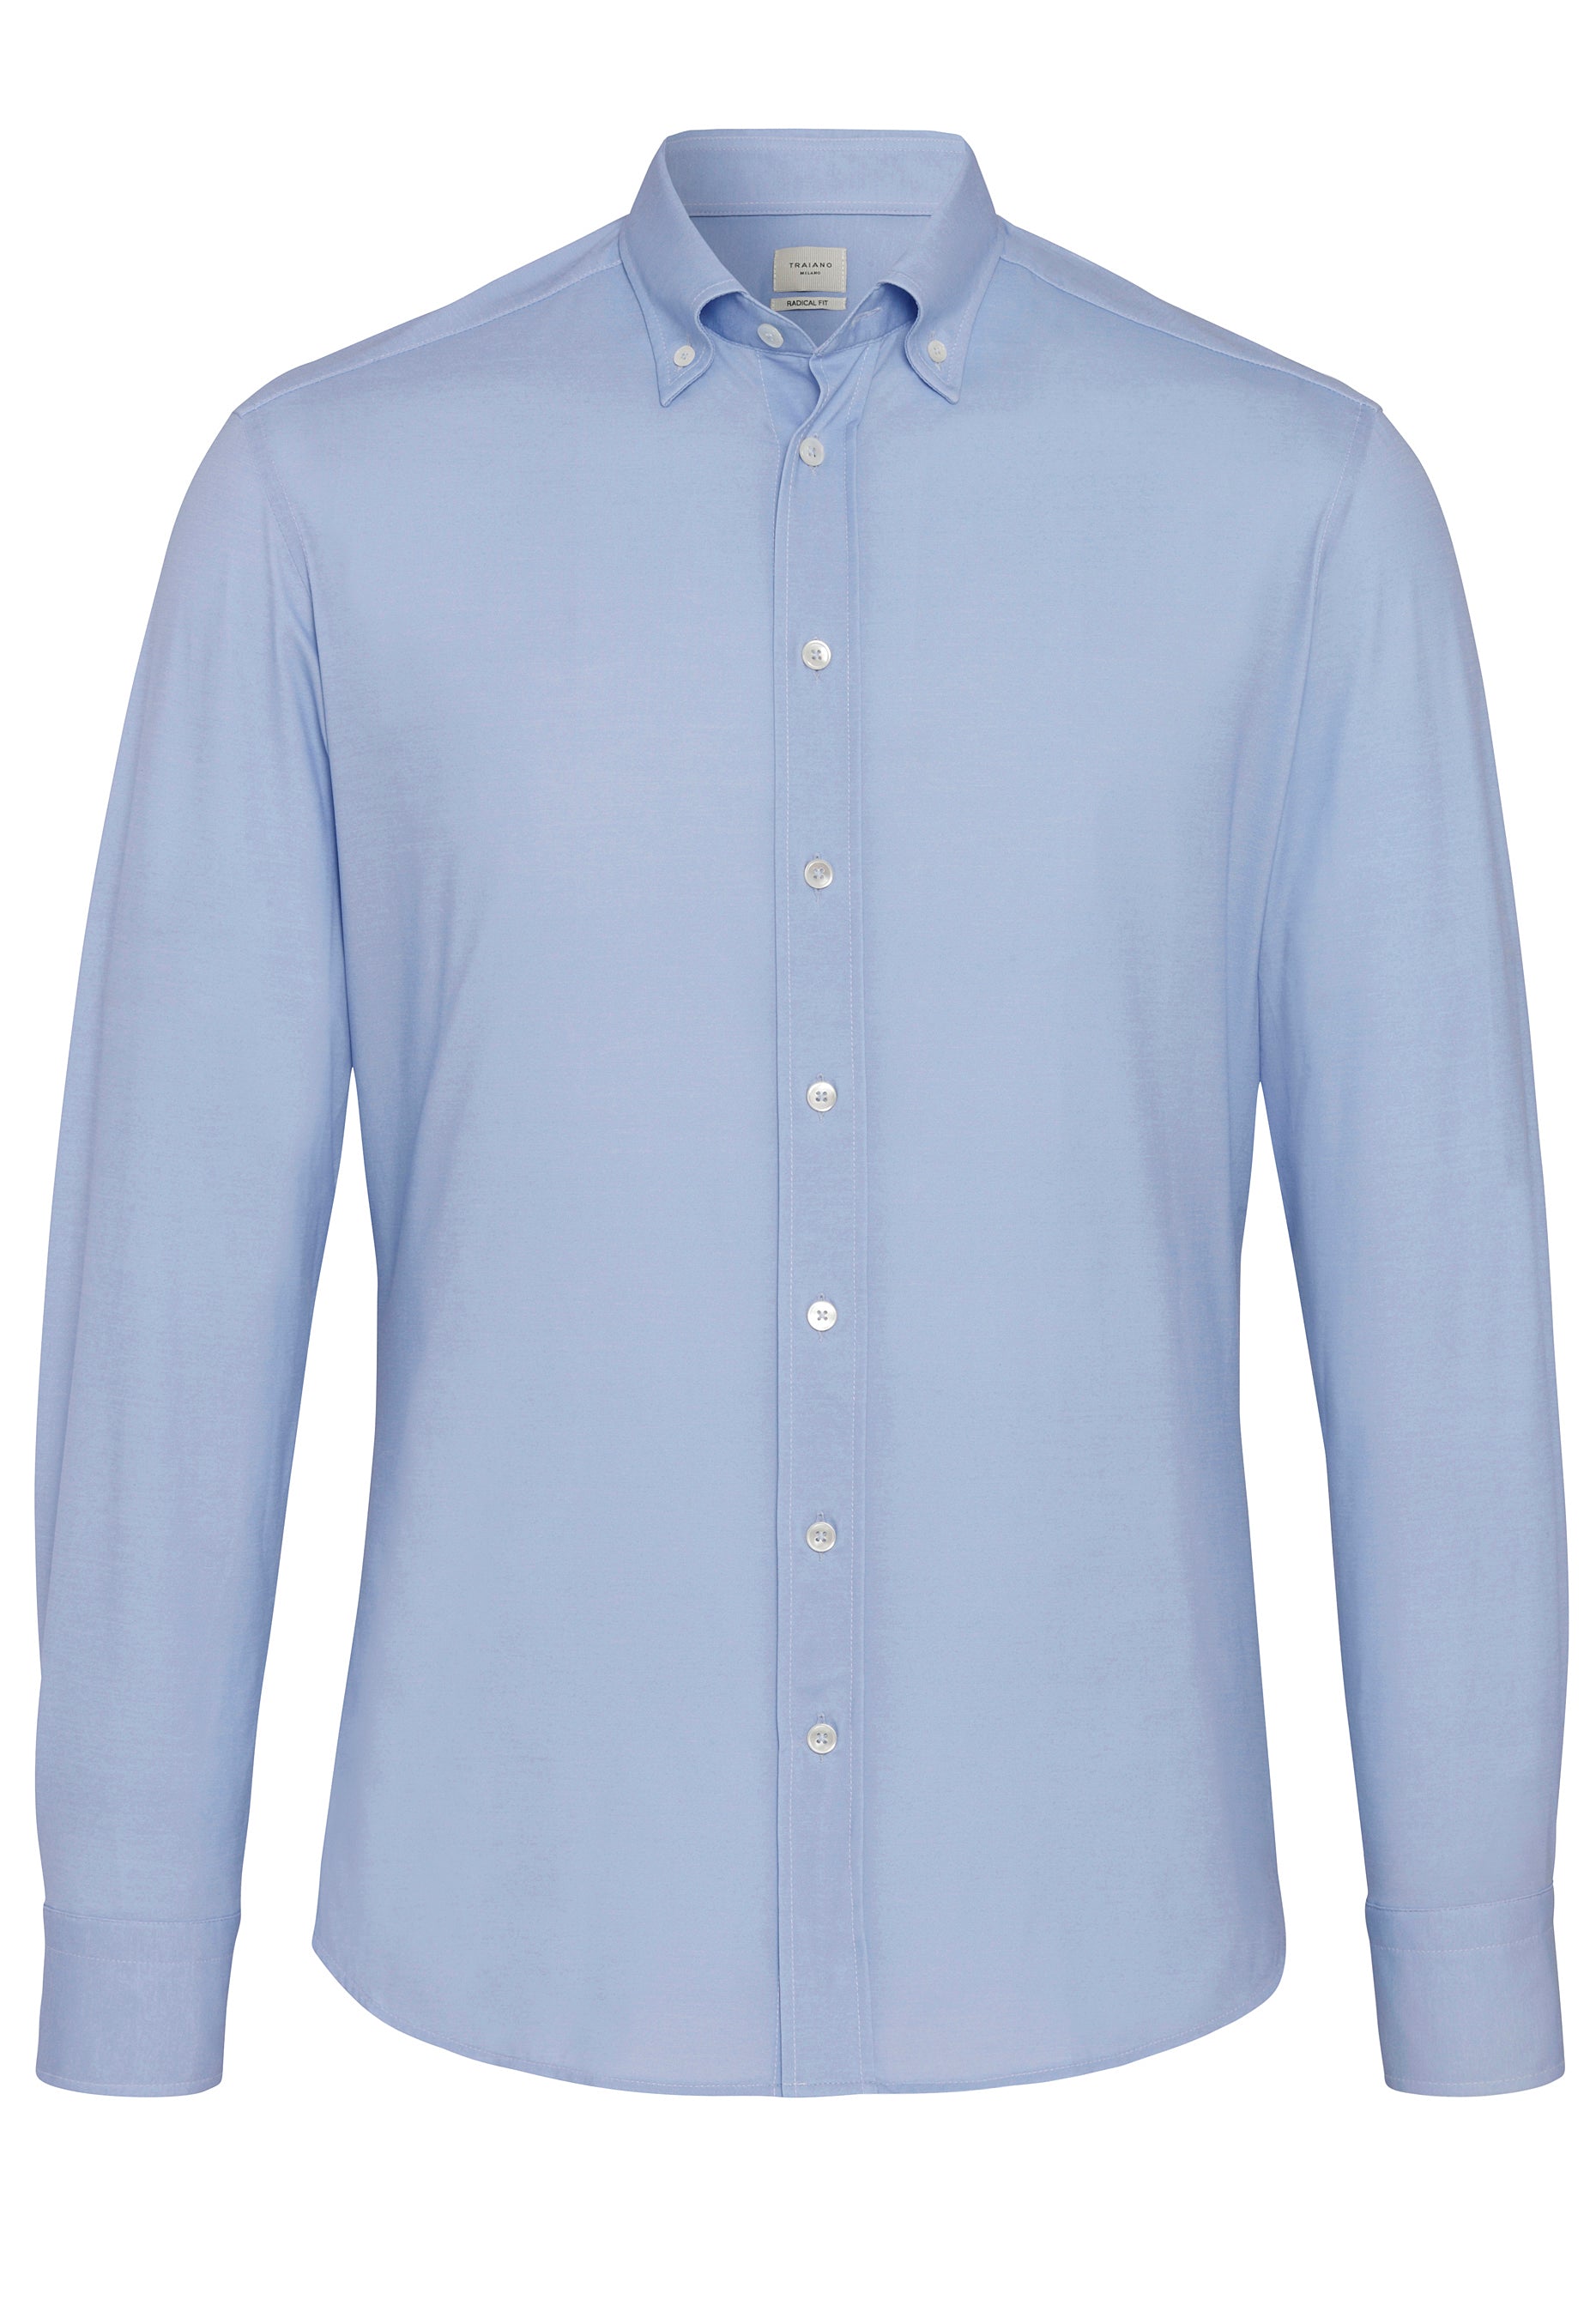 T1010-312 - Button Down Radical Fit Shirt - blue